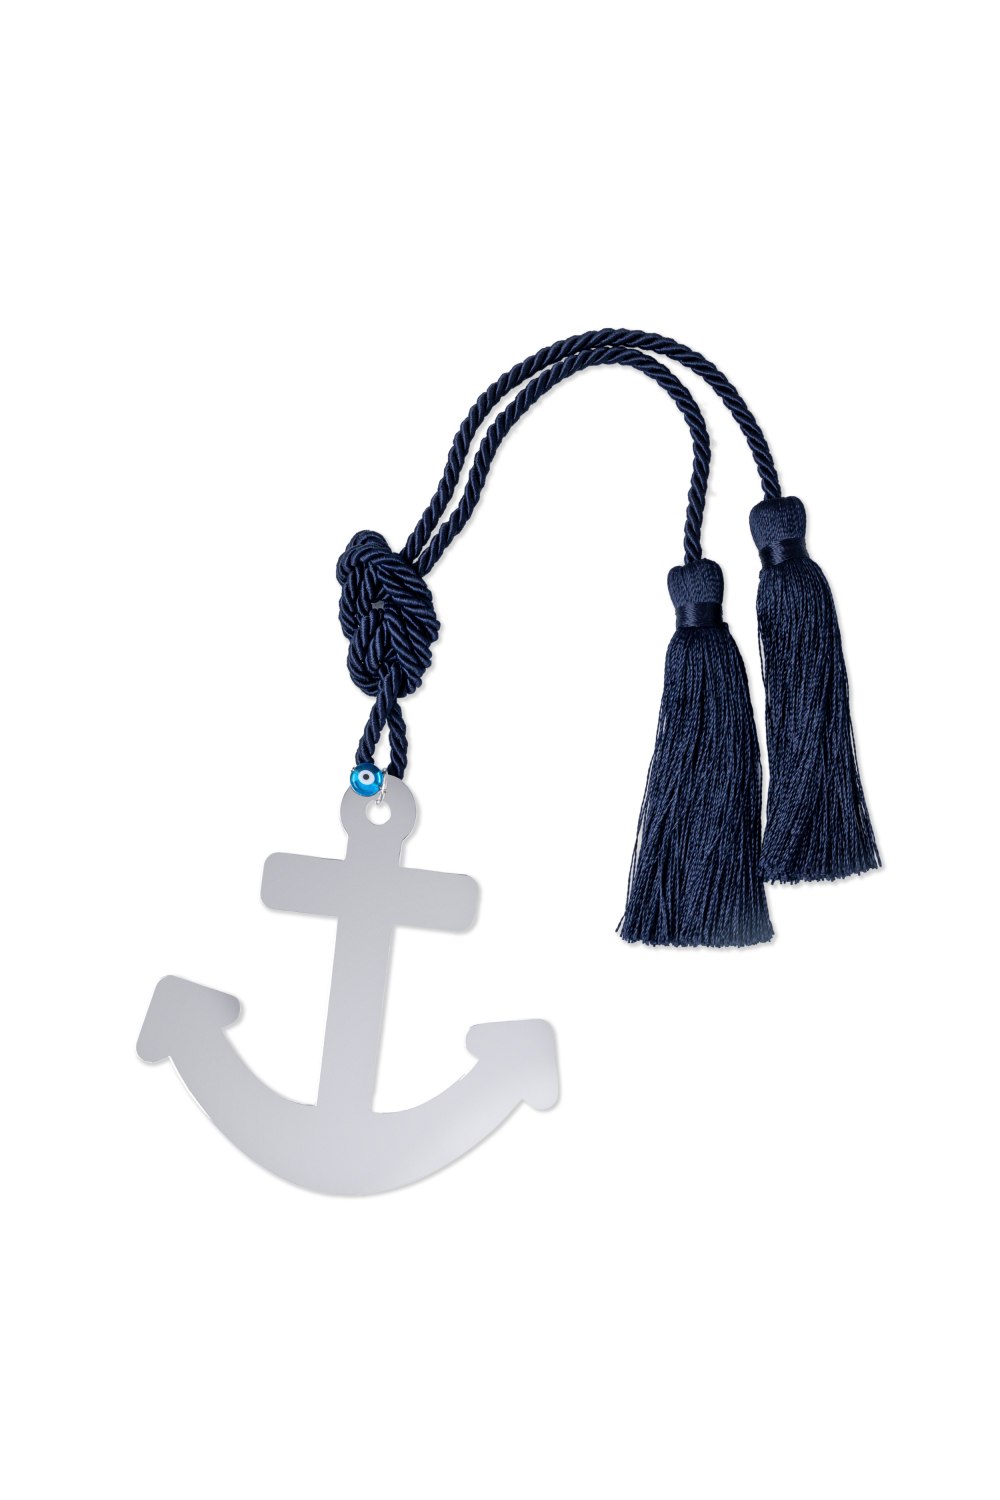 KESSARIS - Anchor Blue Tassels Decorative